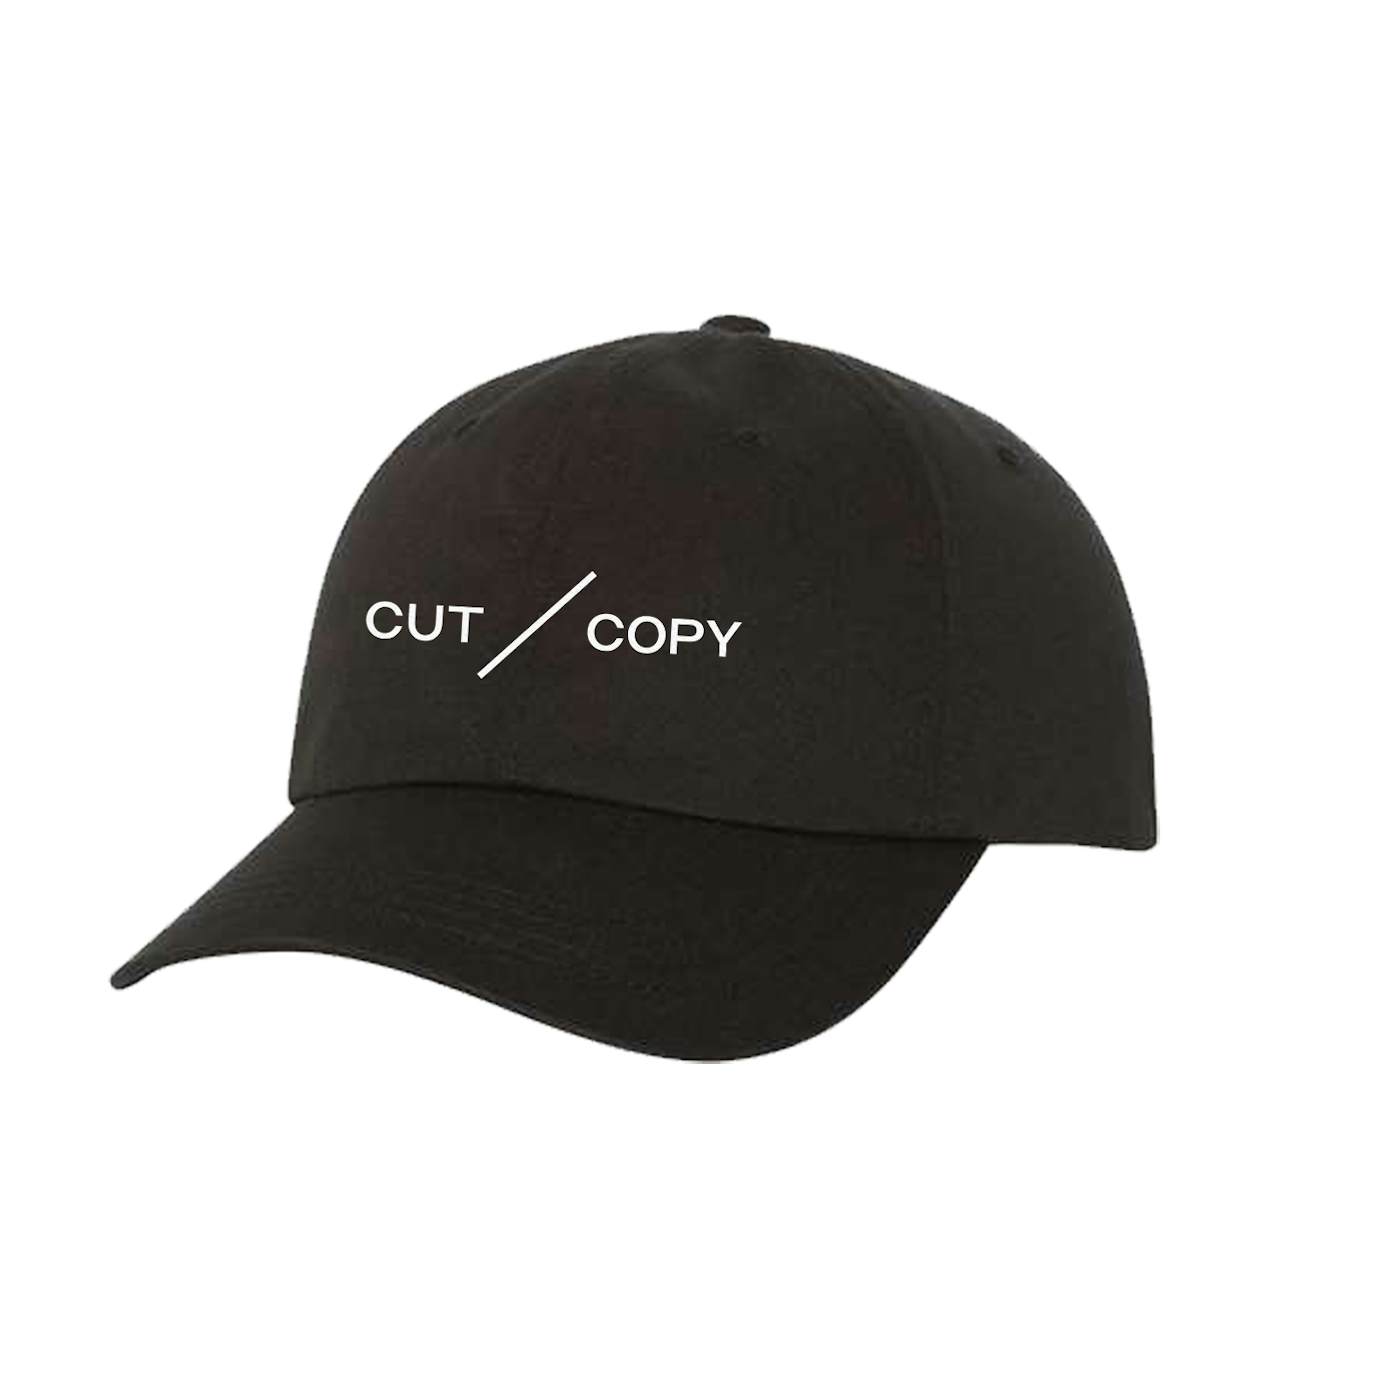 Cut Copy Black Hat